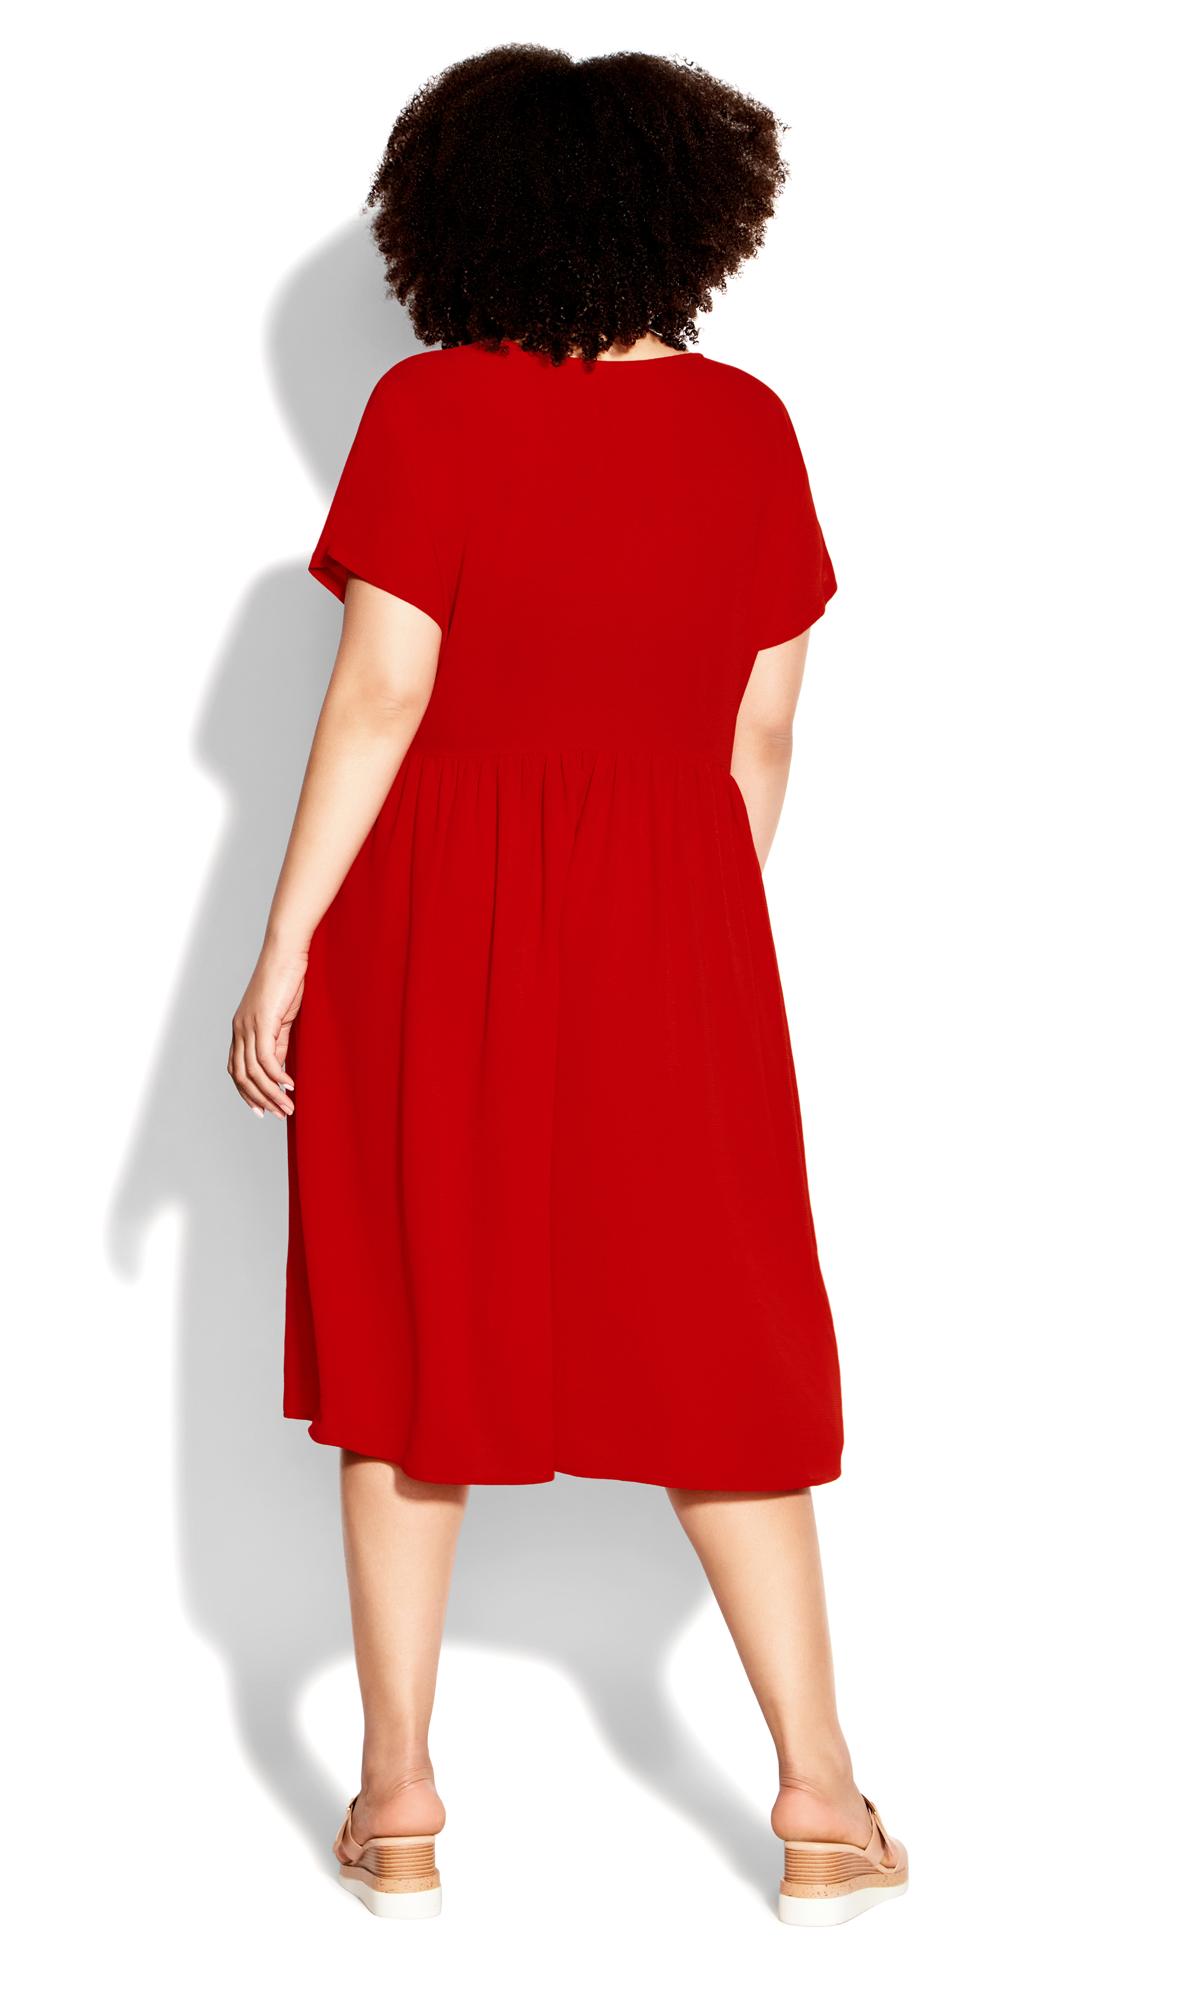 Doll Up Plain Red Dress 2